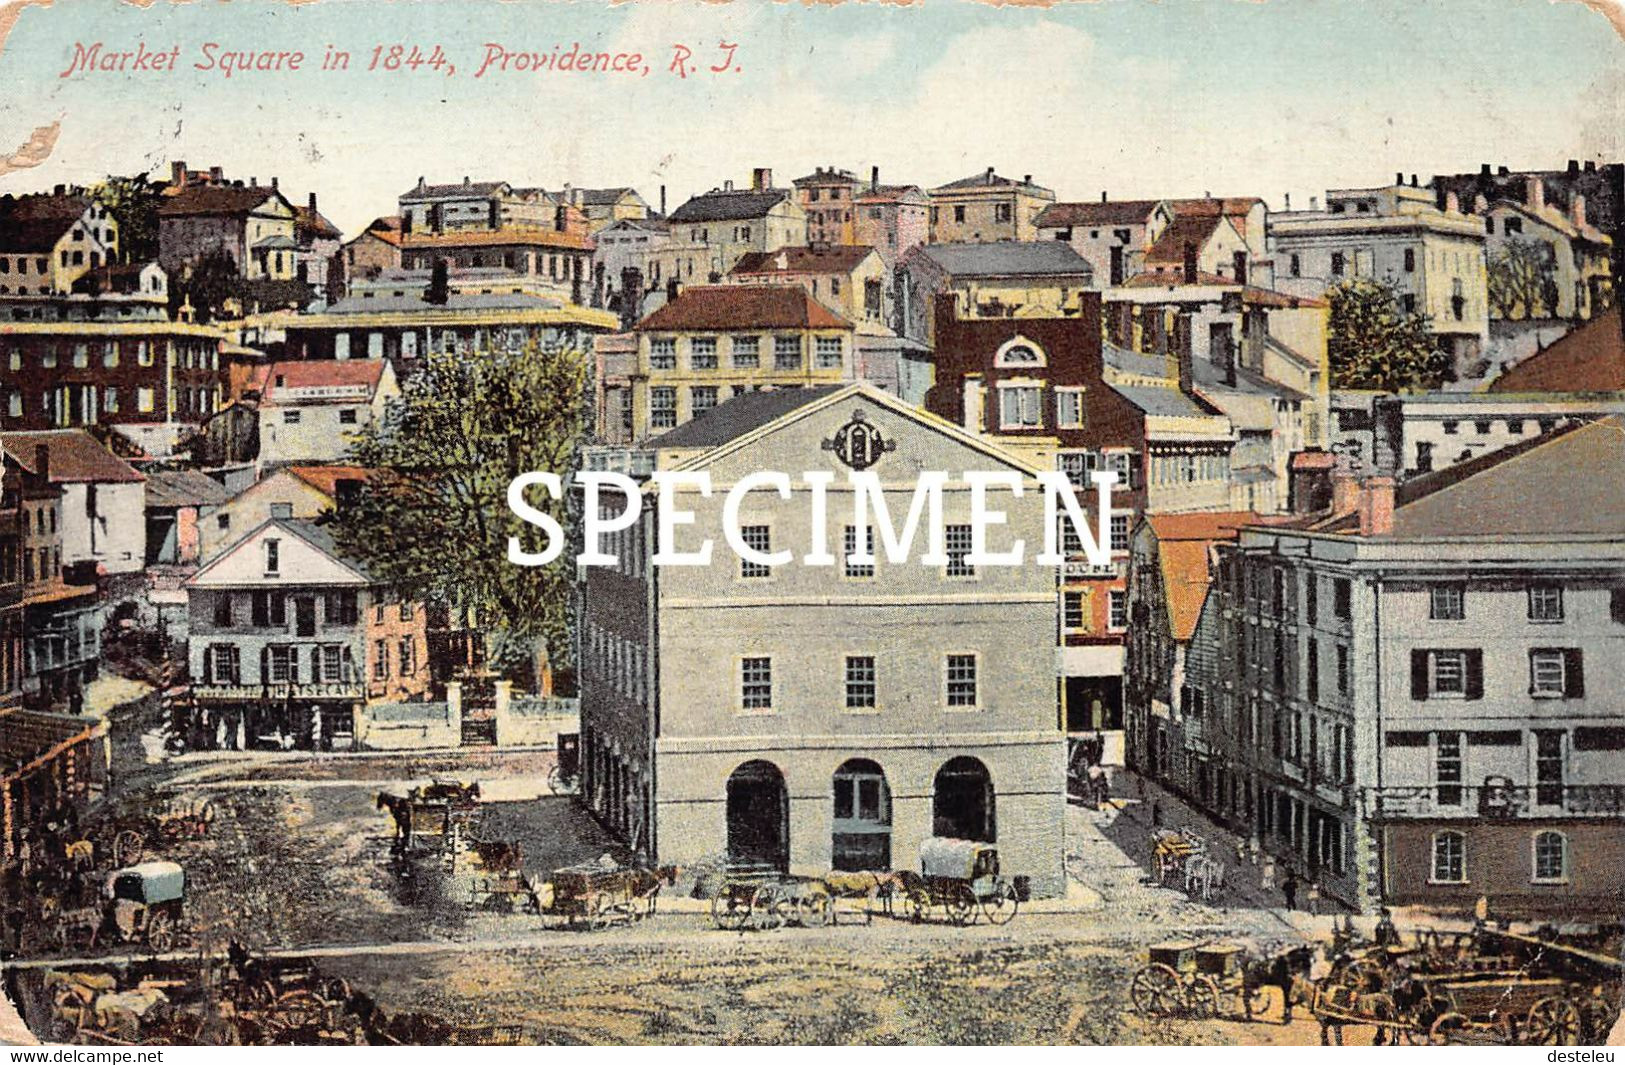 Market Square In 1844 - Providence - Rhode Island - Providence